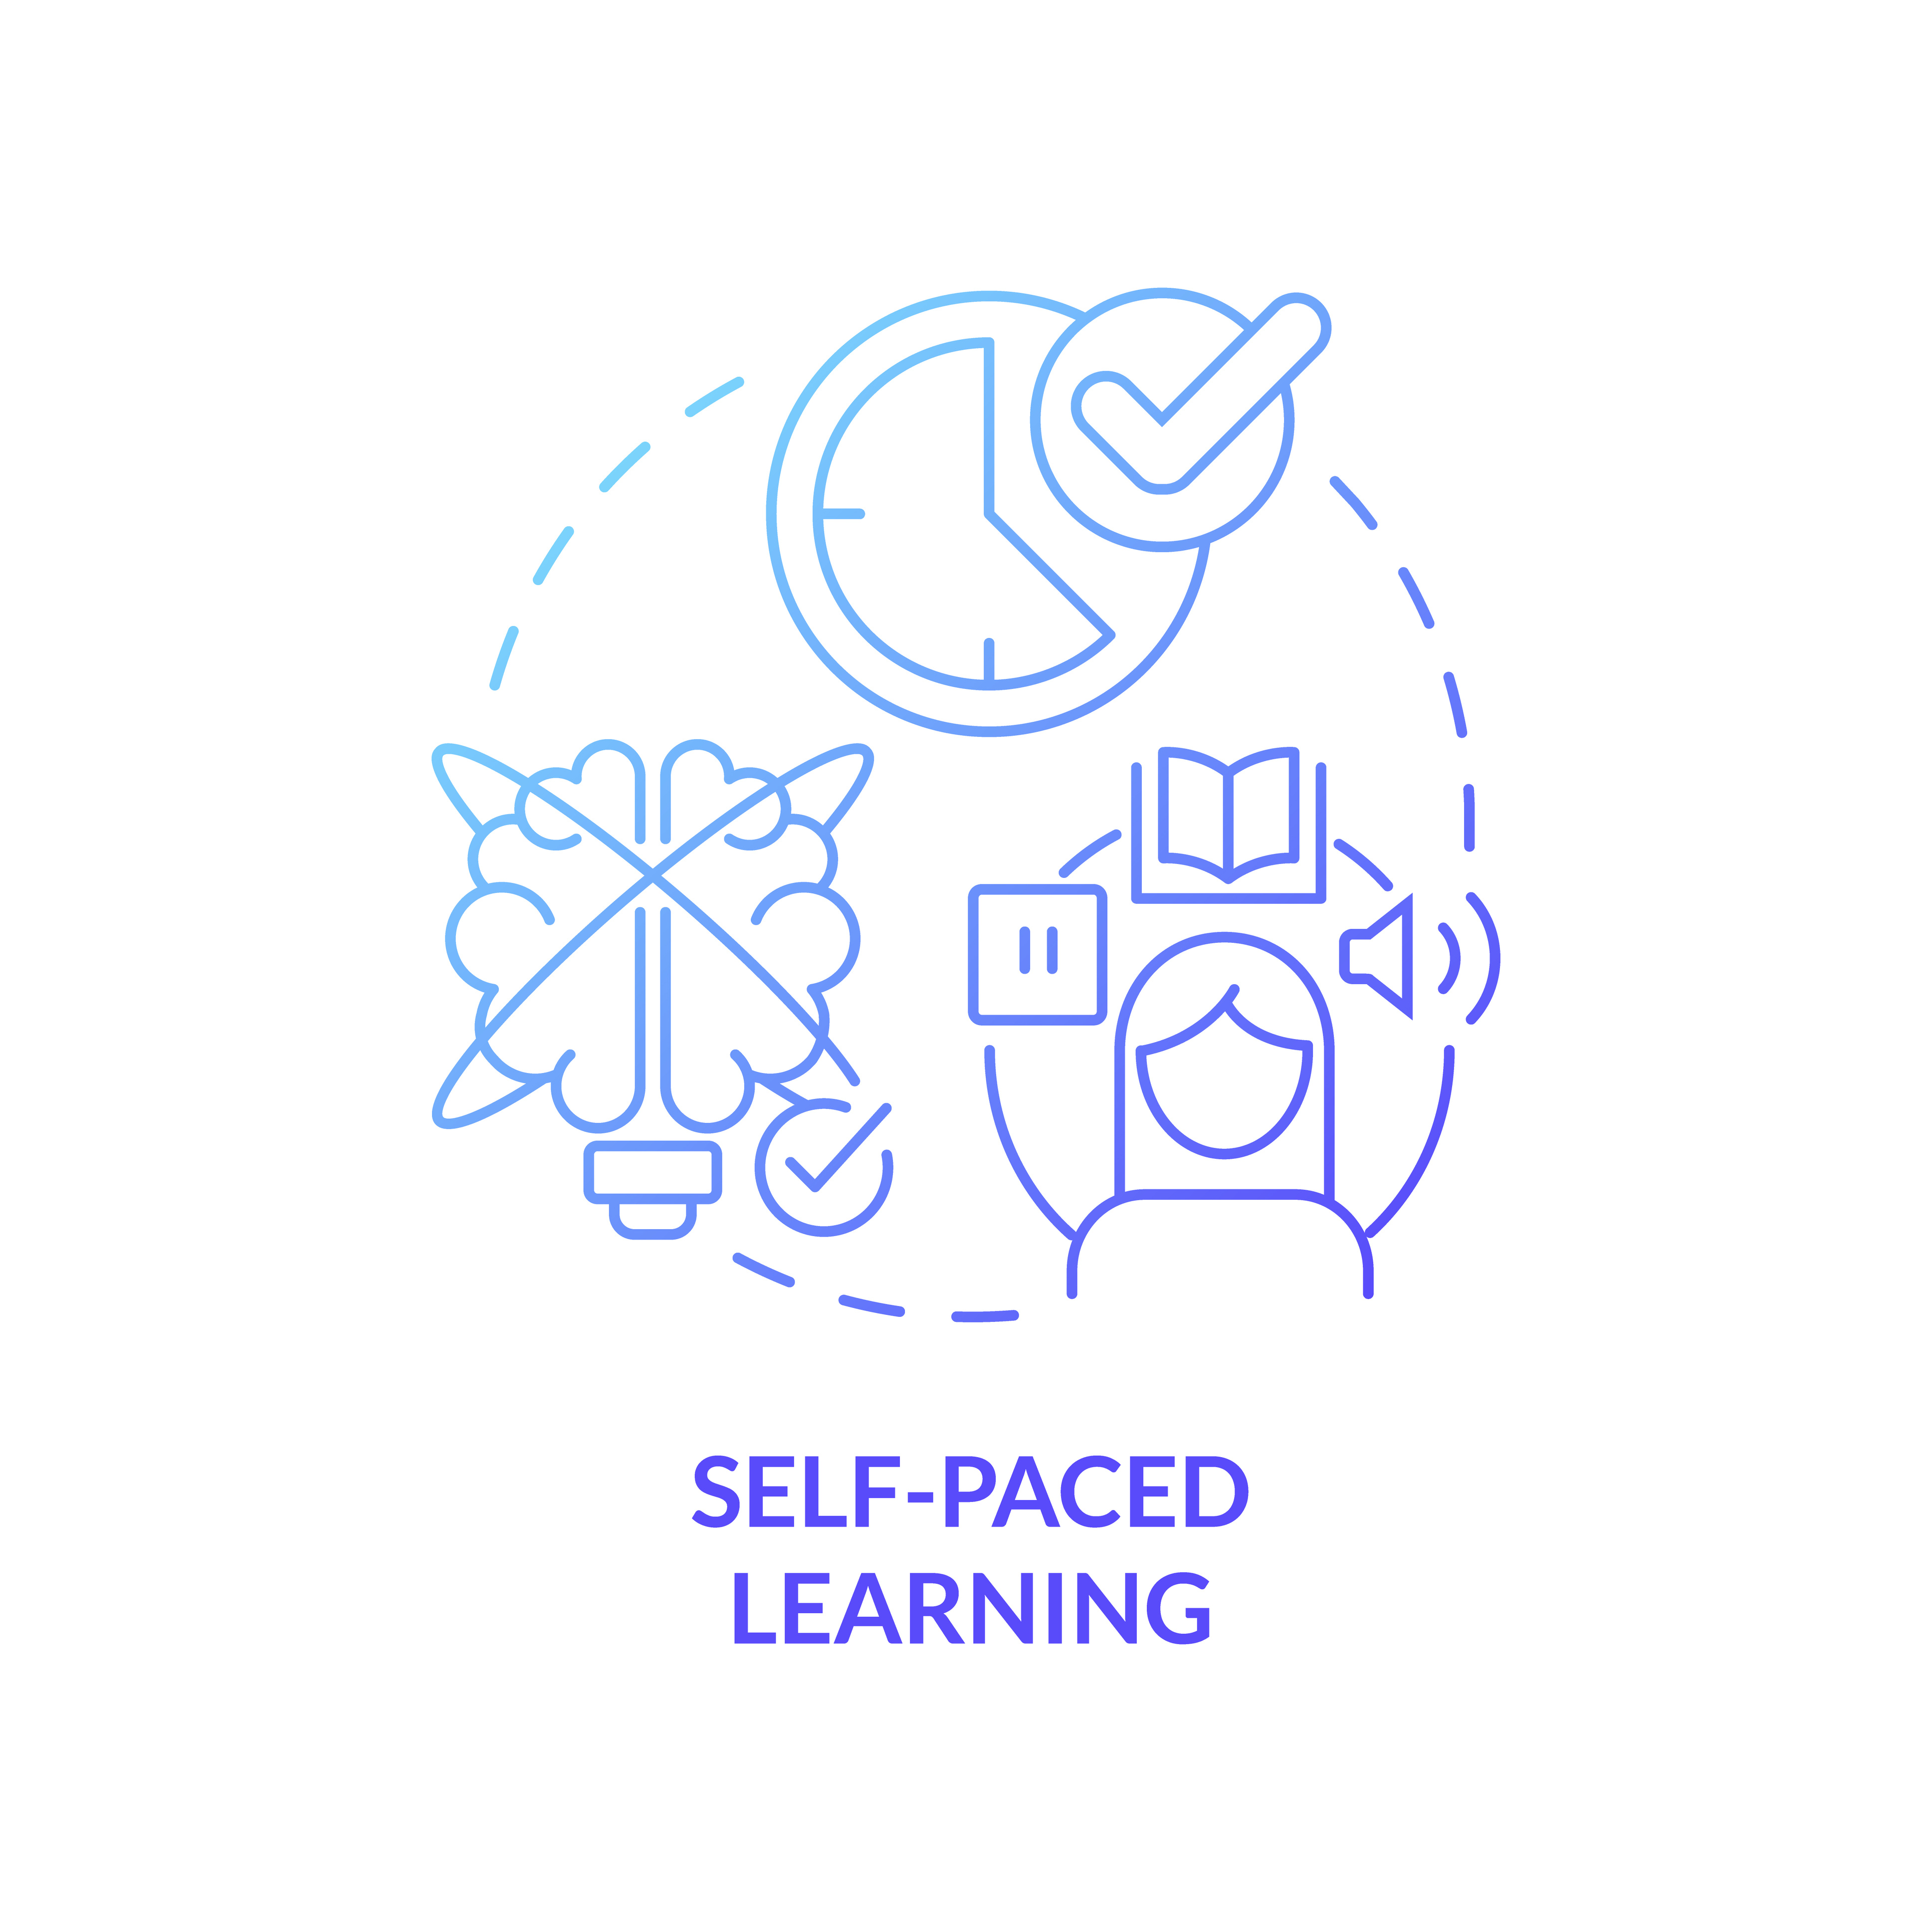 Self learning